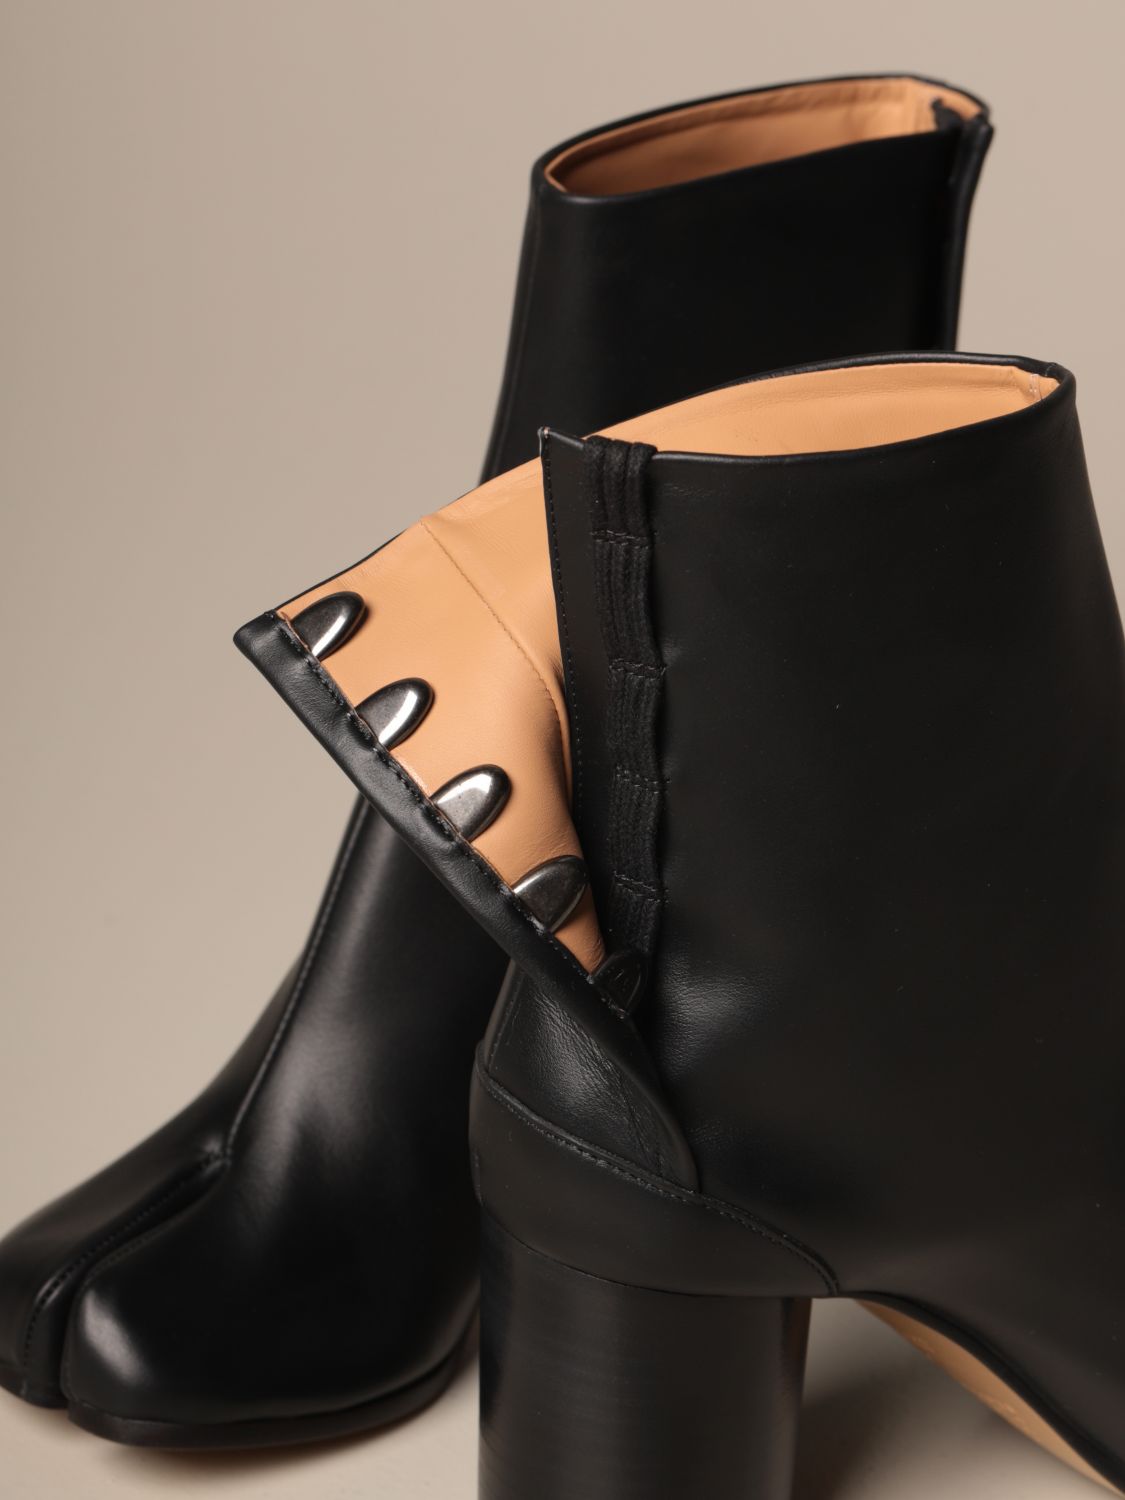 MAISON MARGIELA: Tabi split leather ankle boot | Flat Booties Maison